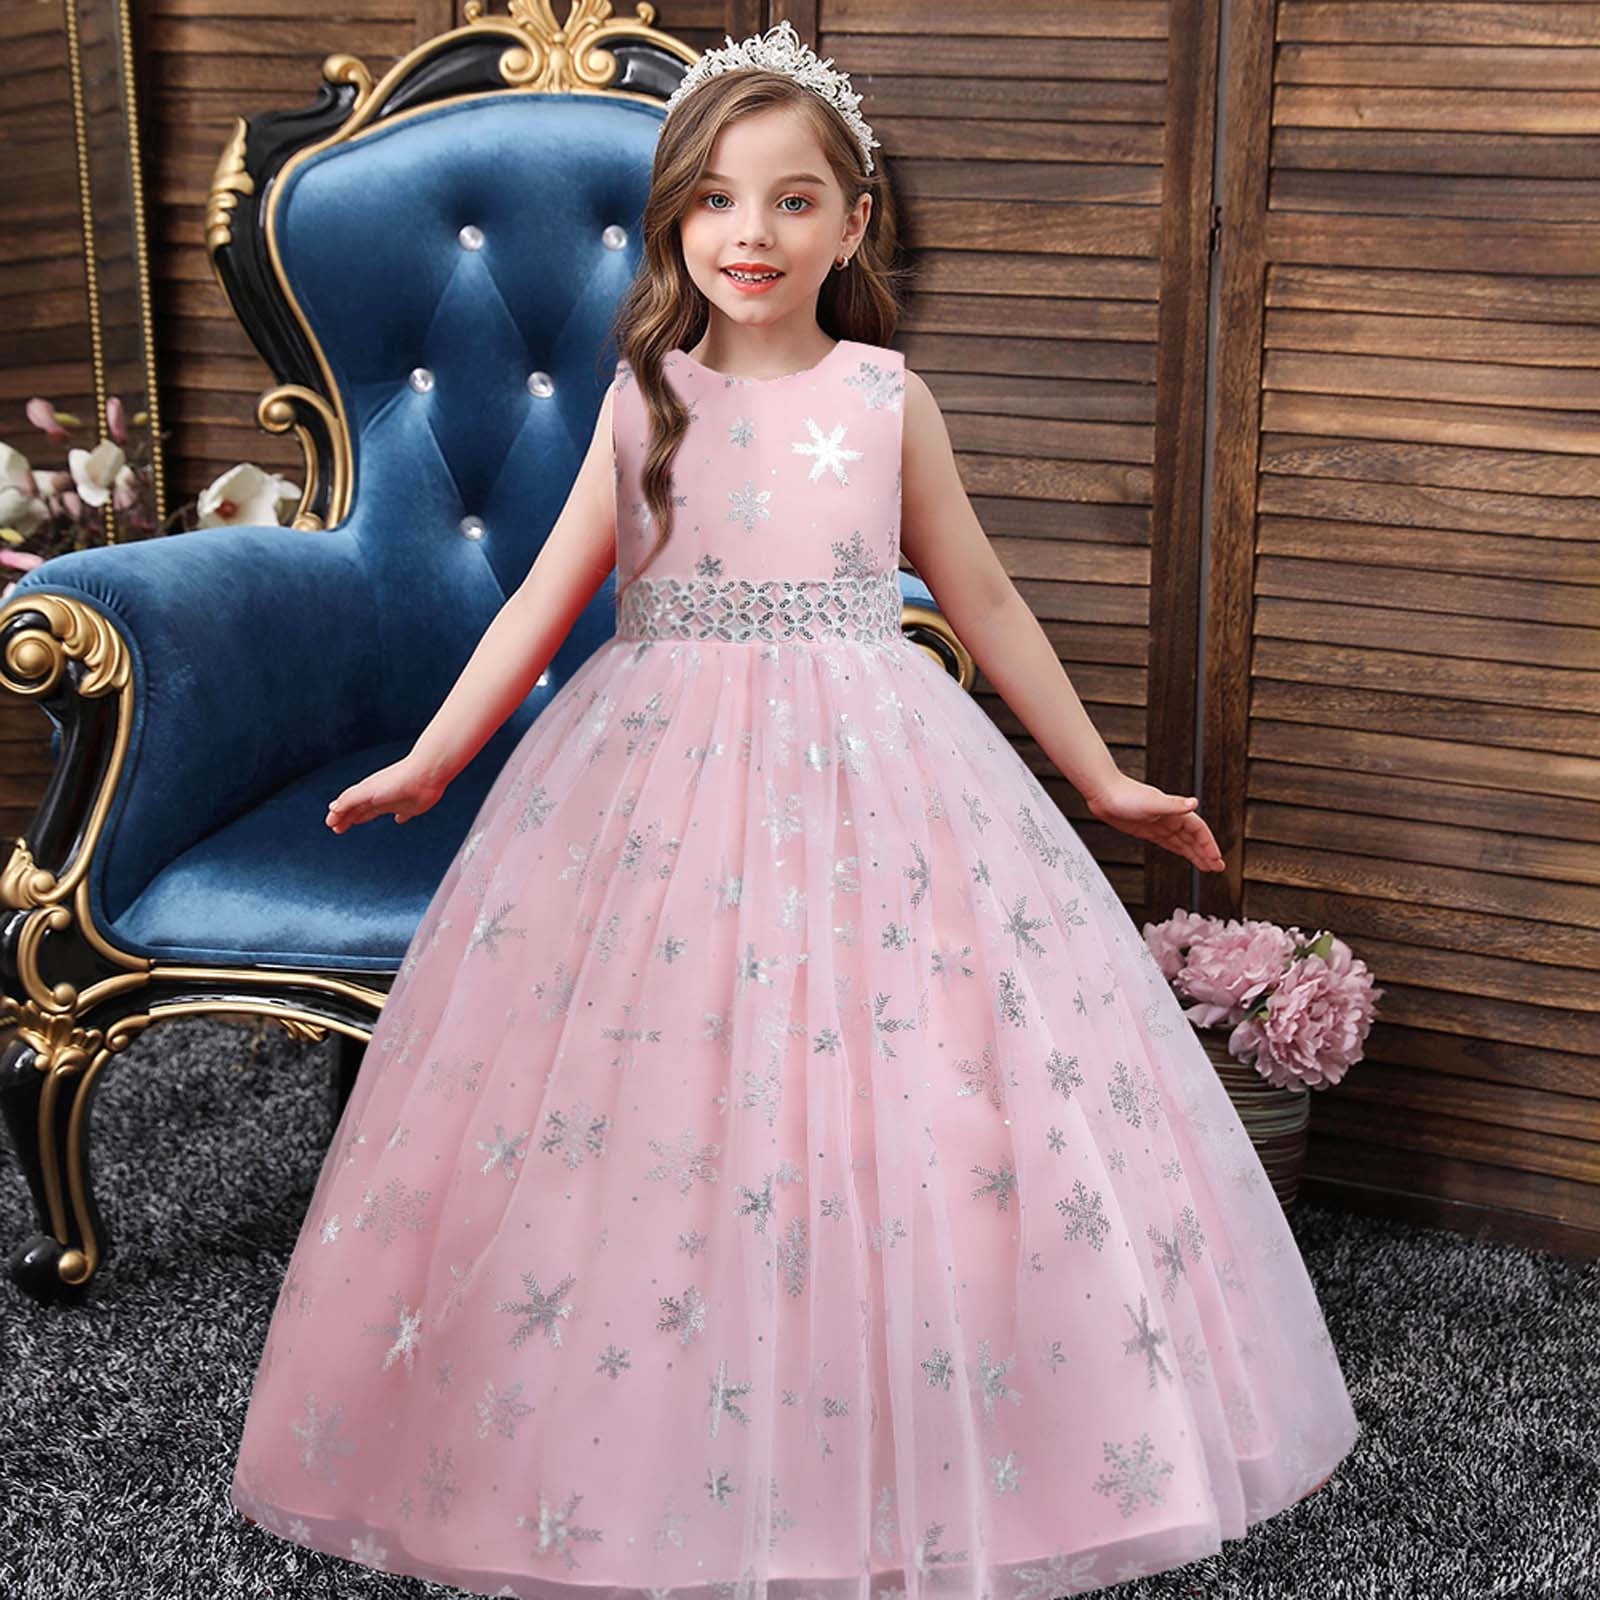 Pink Princess Dress For Baby Girl Britain, SAVE 30% - dostawka.com.pl